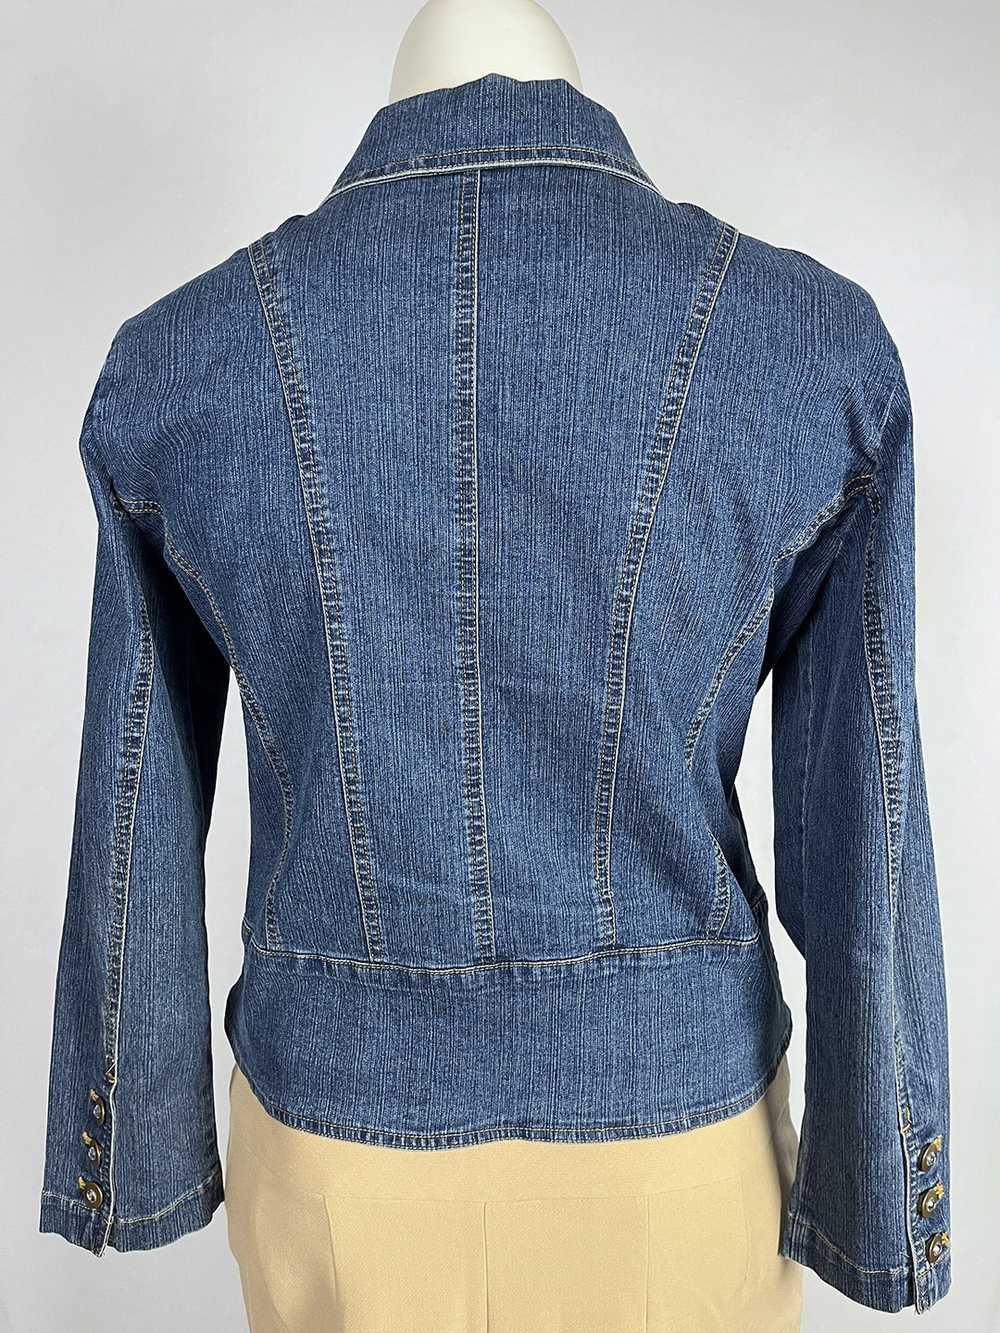 Vintage Erika Size PL (14) Peplum Denim Jacket - image 6